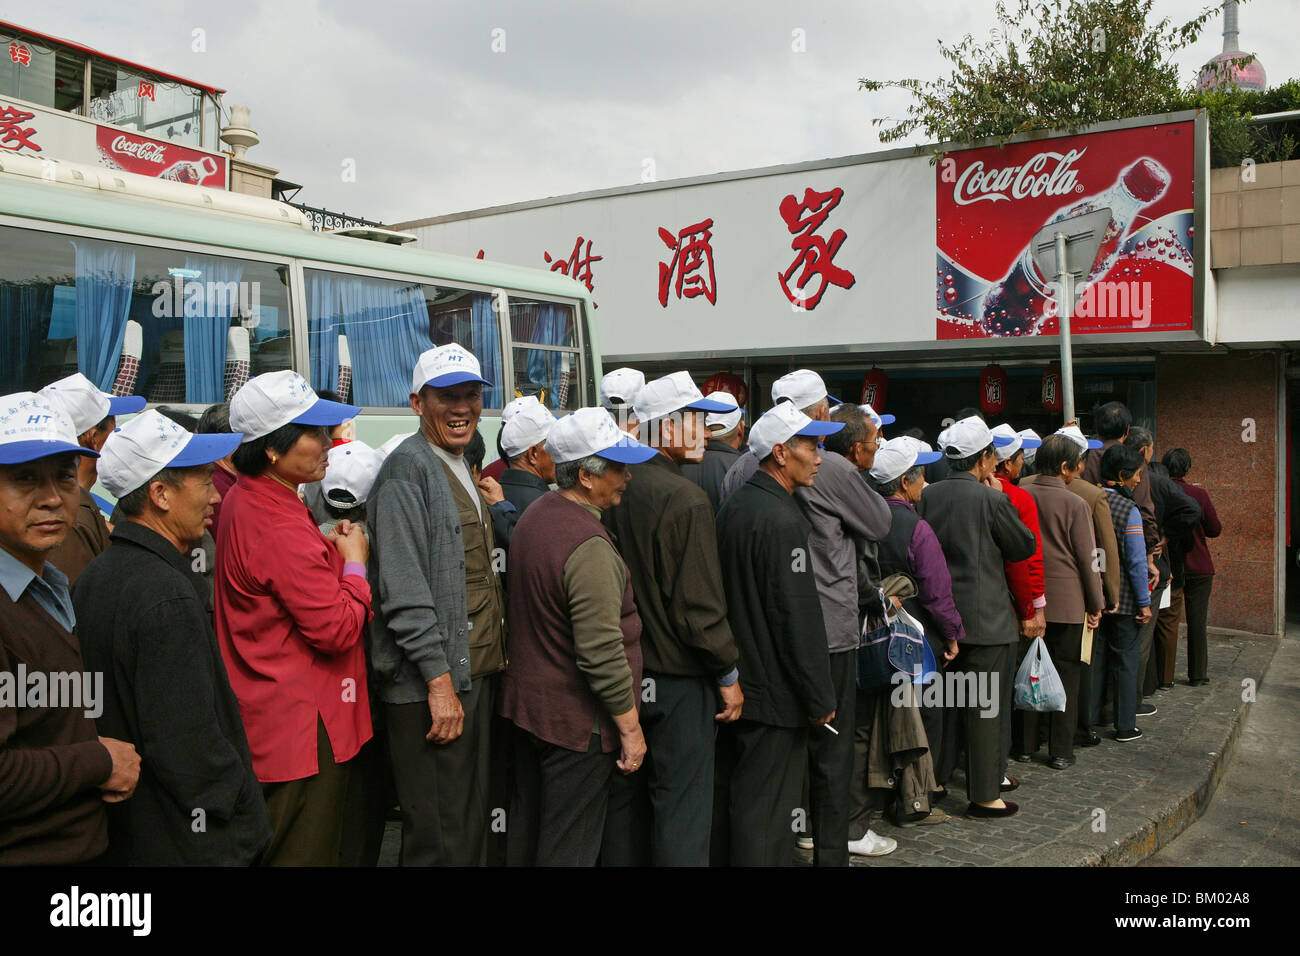 chinese tourists, bus tour, uniform cap, advertising, queue, old folks Stock Photo